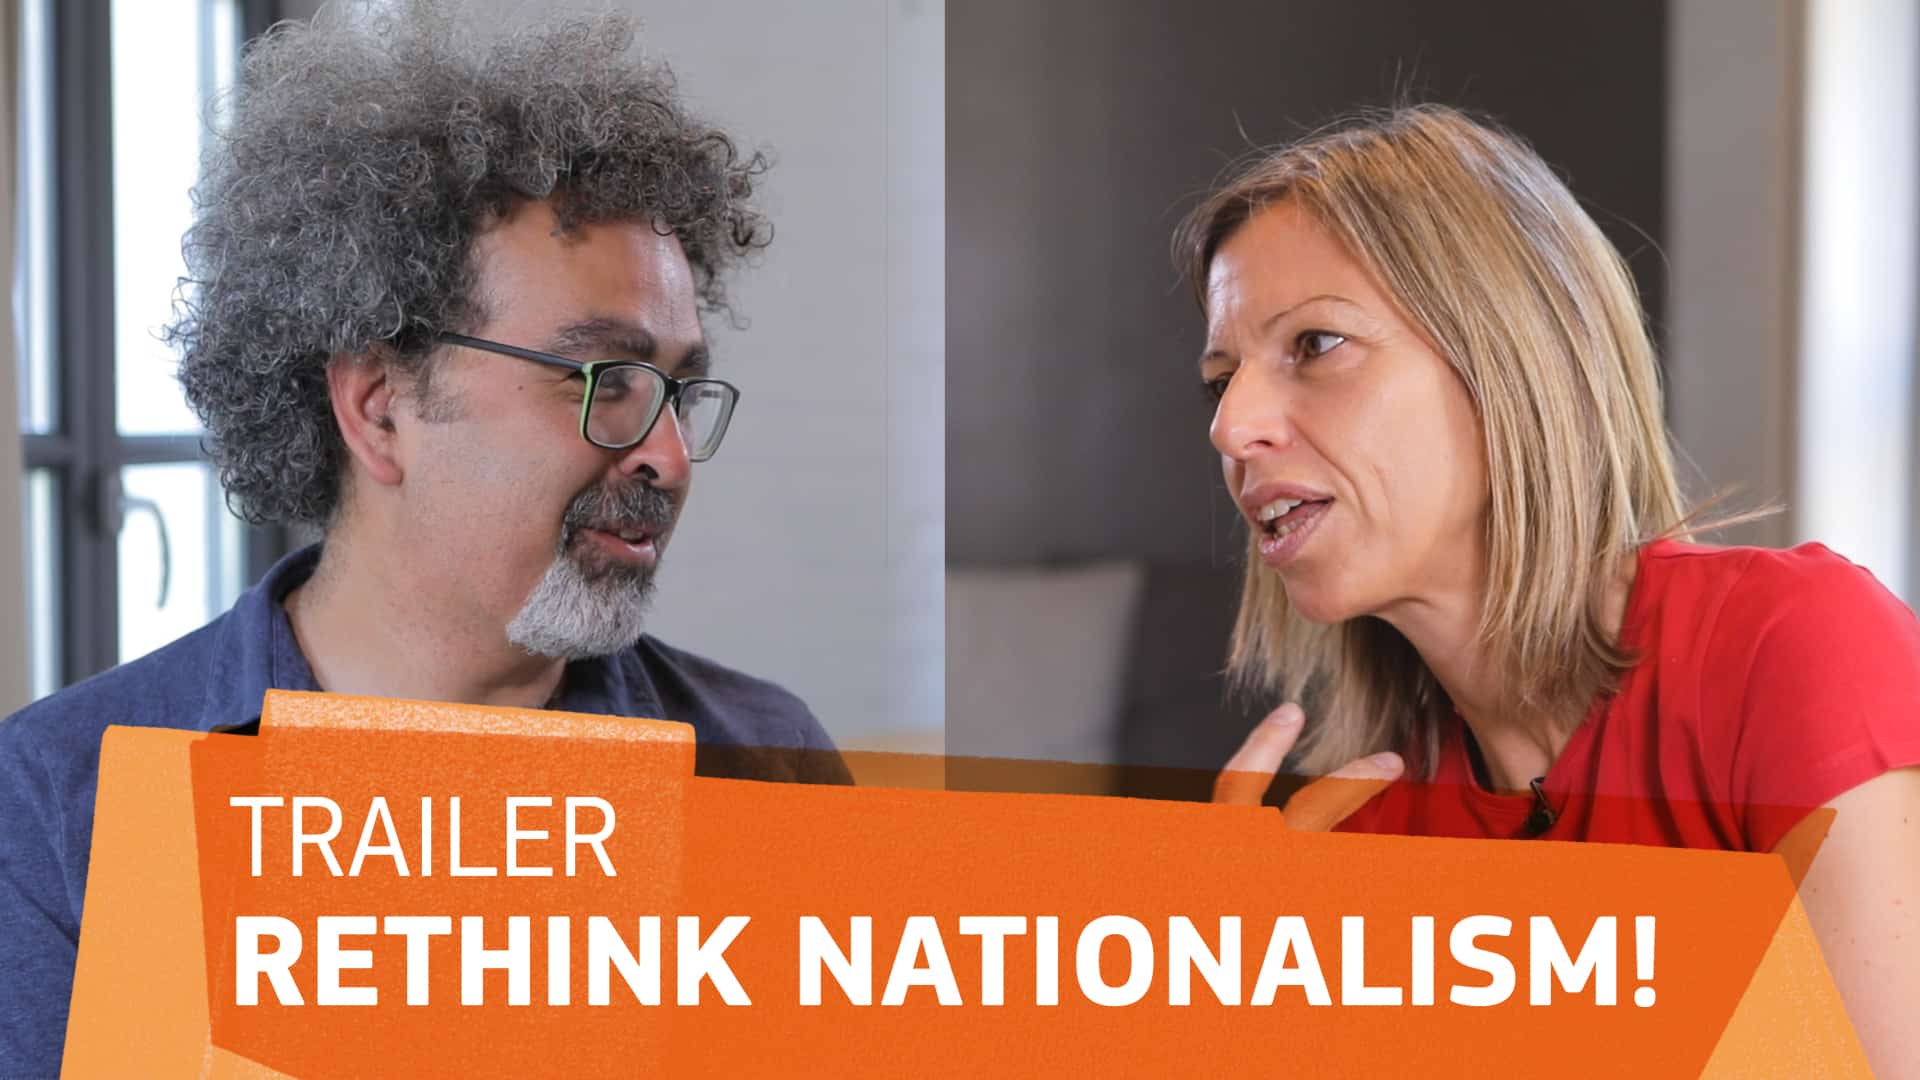 Nando Sigona and Anna Triandafyllidou with text overlay 'Trailer Rethink Nationalism!'